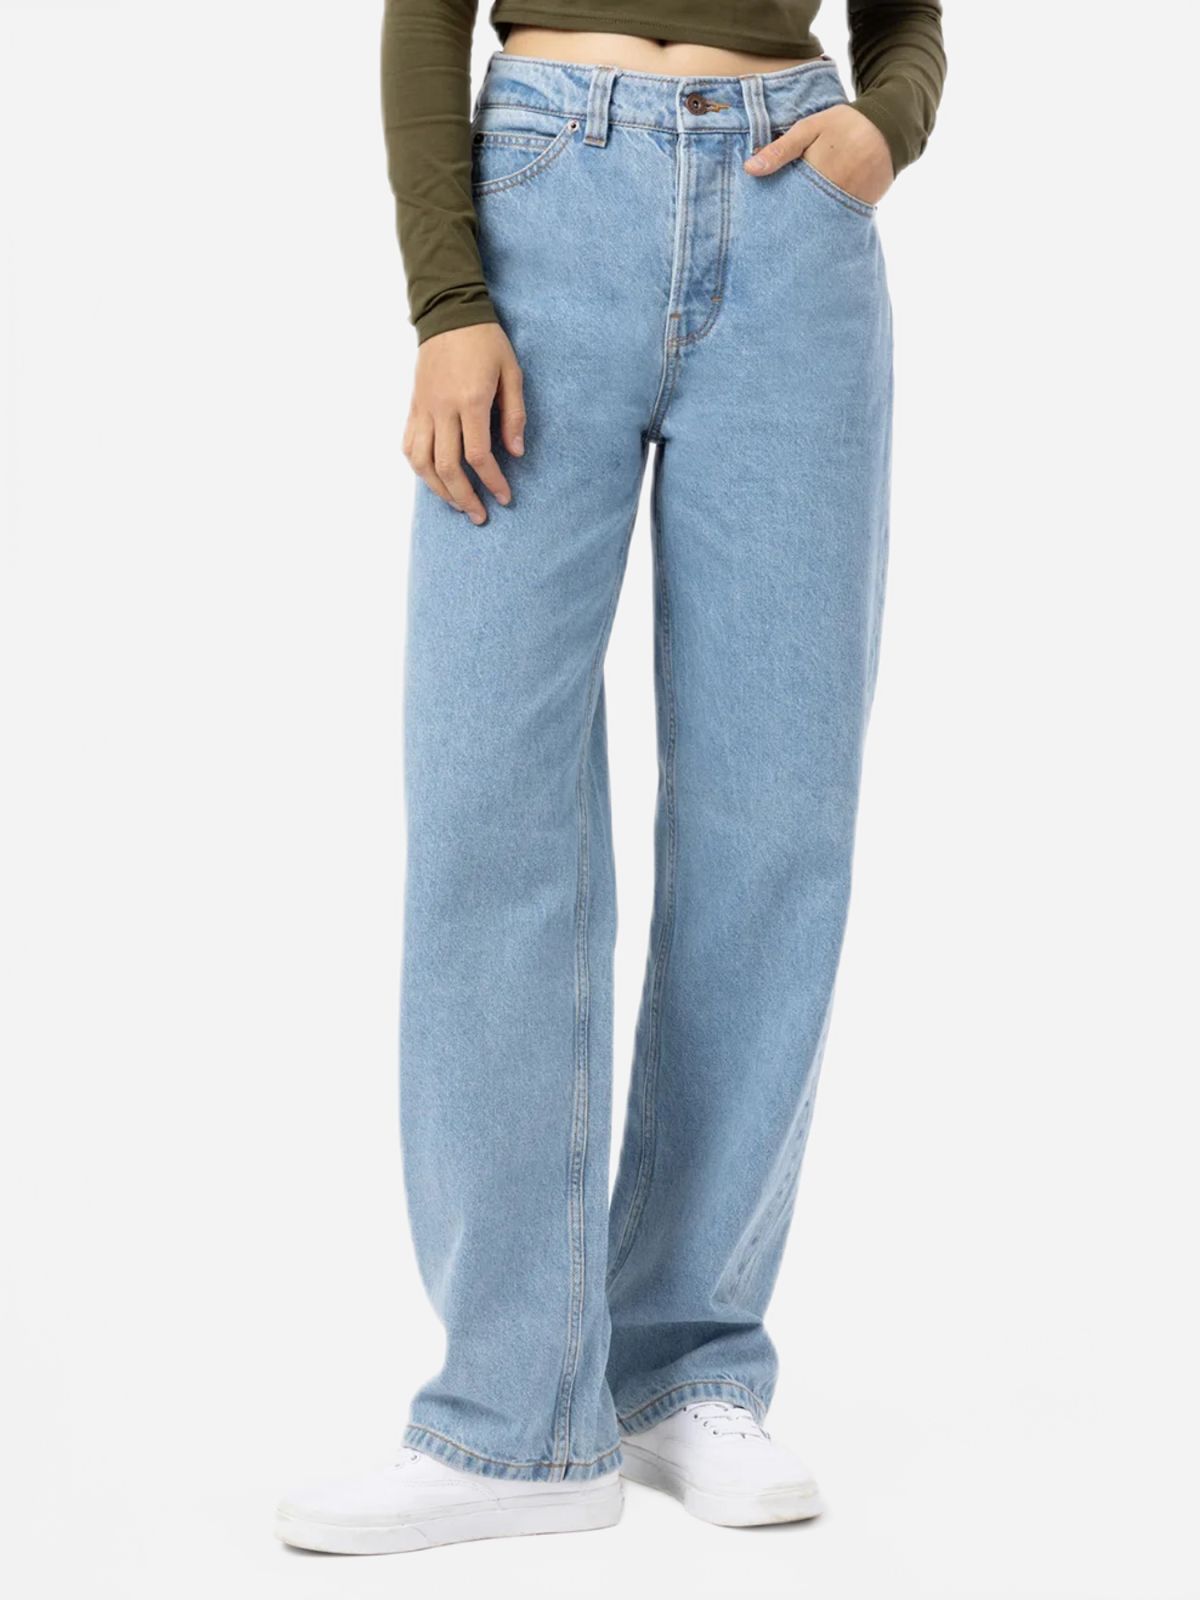  THOMASVILLE ג'ינס בגזרה רחבה של DICKIES